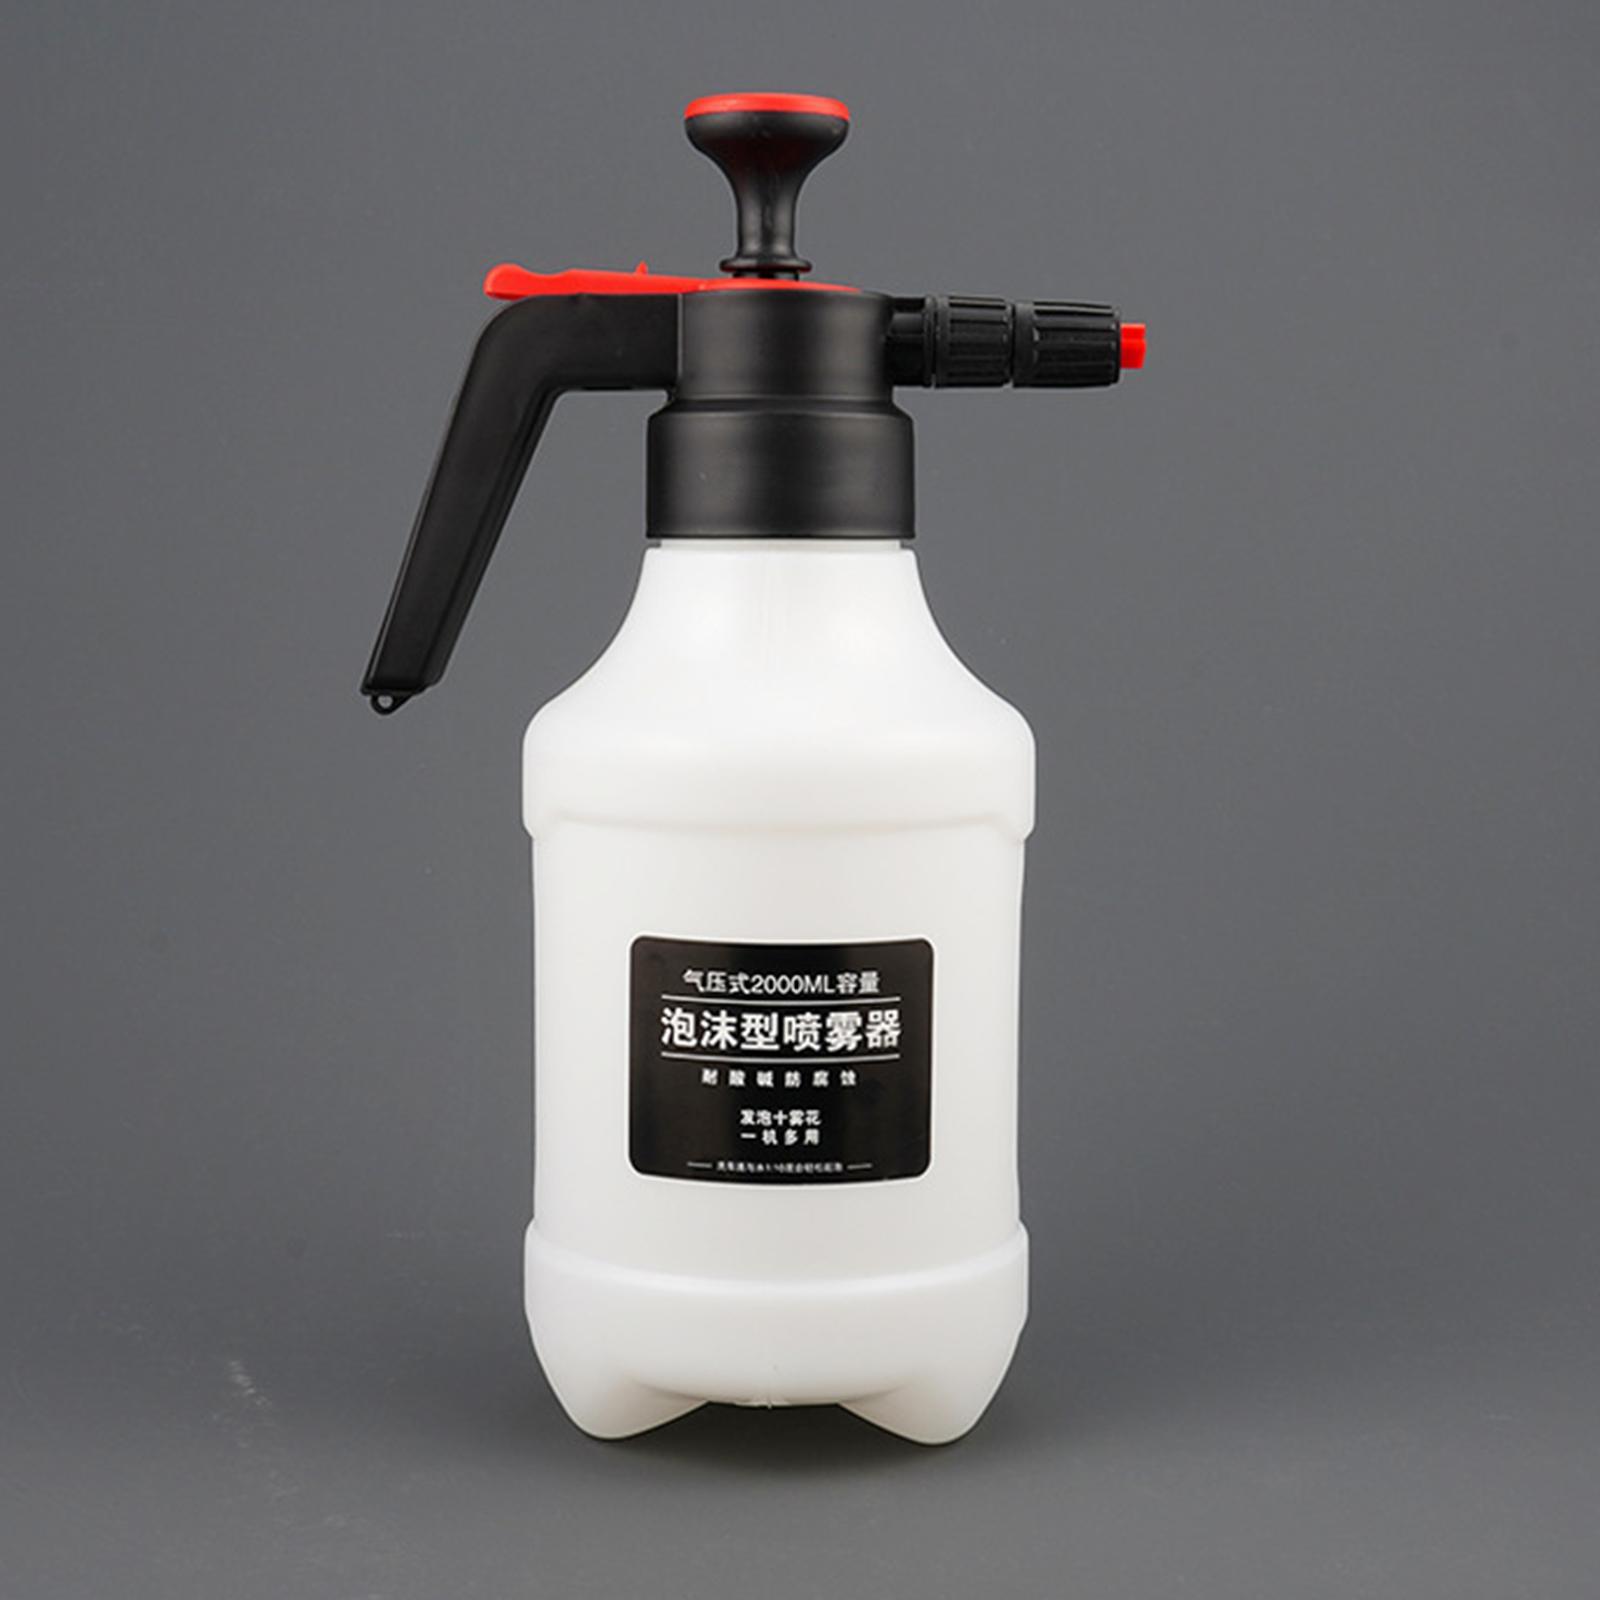 Foam Sprayer, Foaming Pump Hand Pressure Snow Foam Sprayer Water Sprayer Bottle Hand Pressurized Soap Foam Sprayer Manual Pump Car Wash Bottle 2.0L